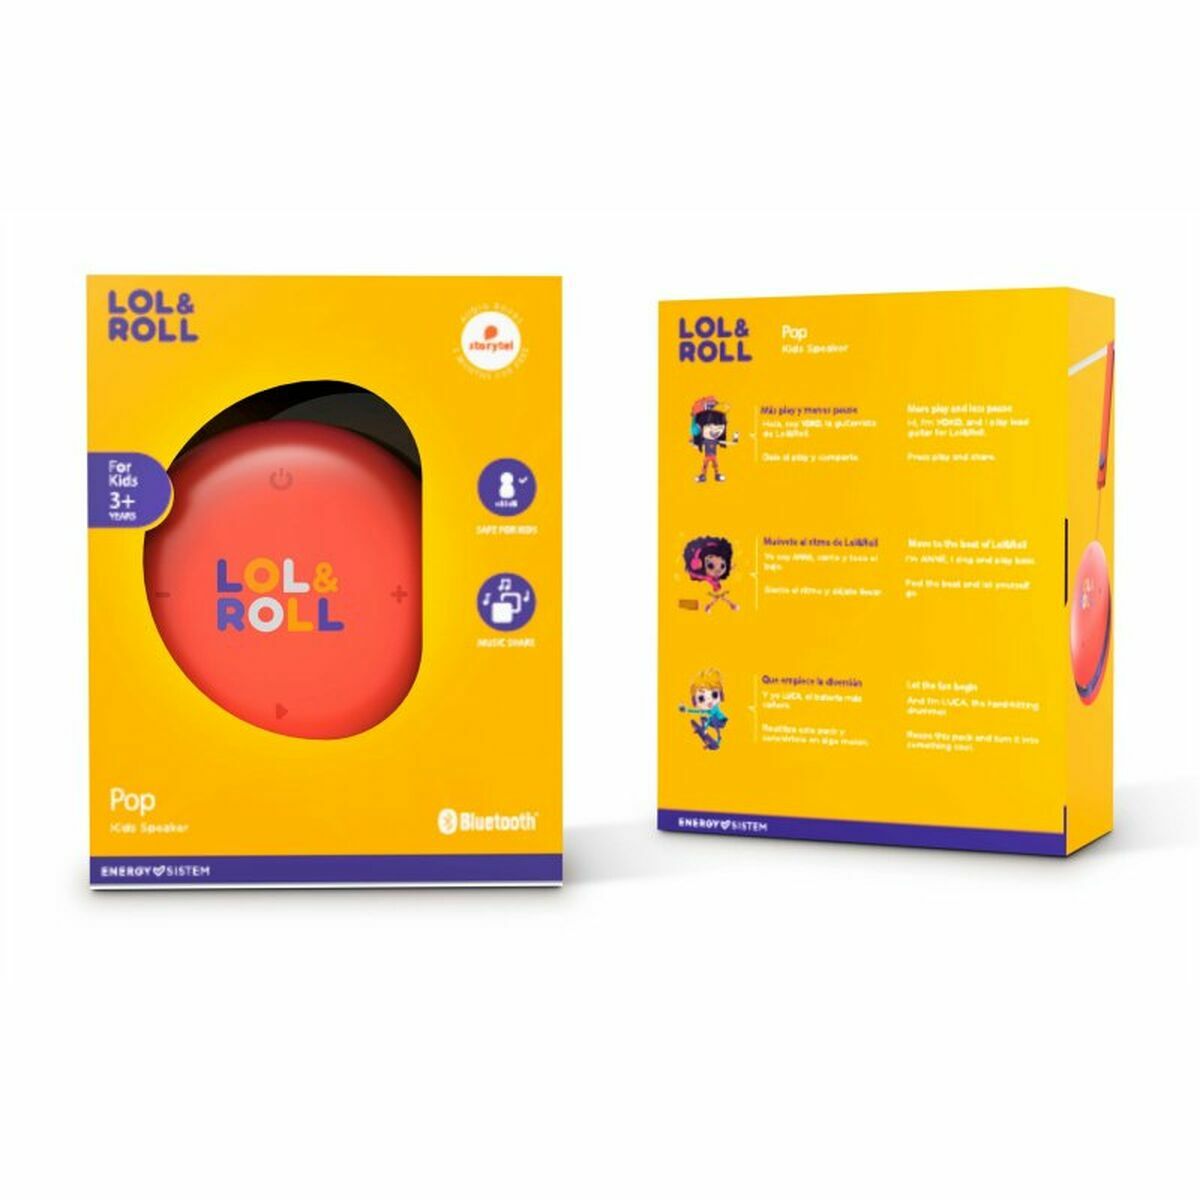 Tragbare Bluetooth-Lautsprecher Energy Sistem Lol&Roll Pop Kids Orange 5 W 500 mAh